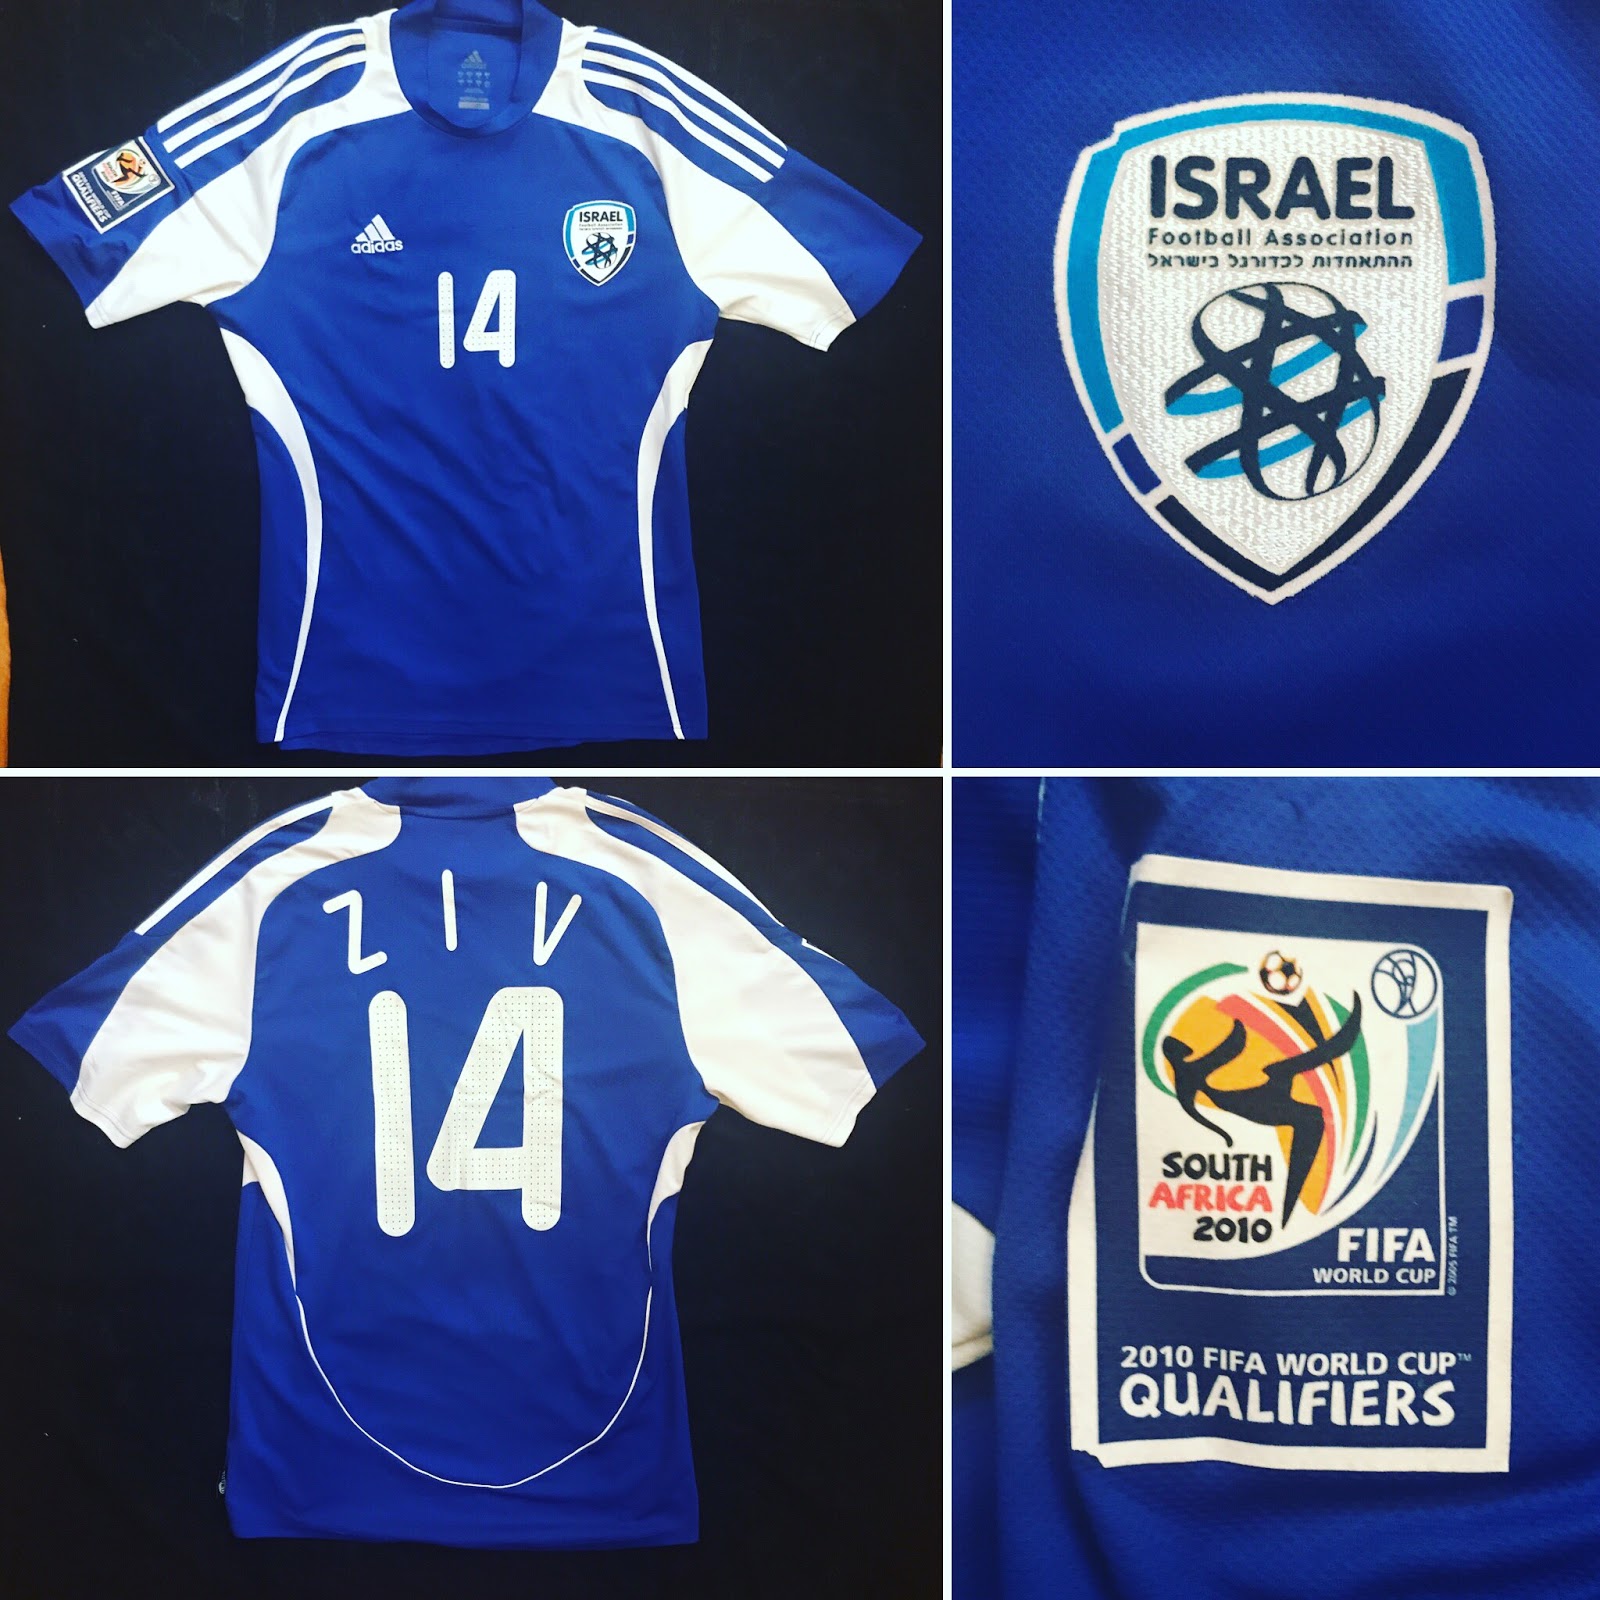 adidas israel jersey